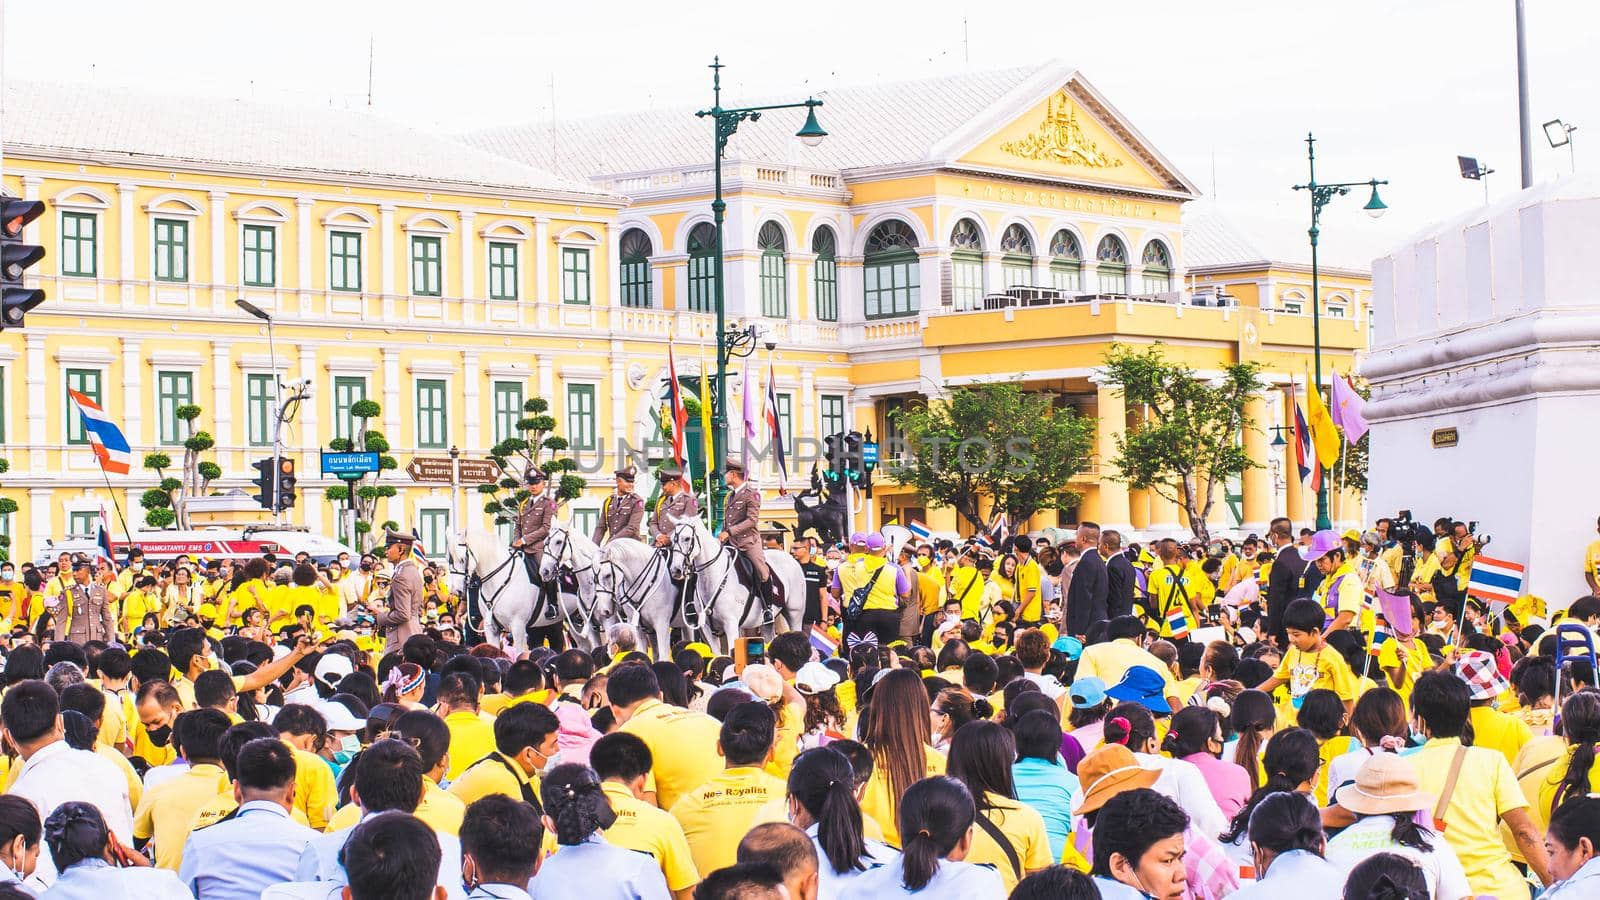 2020 November 01 Bangkok Thailand wearing yellow shirts rally in support of monarchy by Petrichor